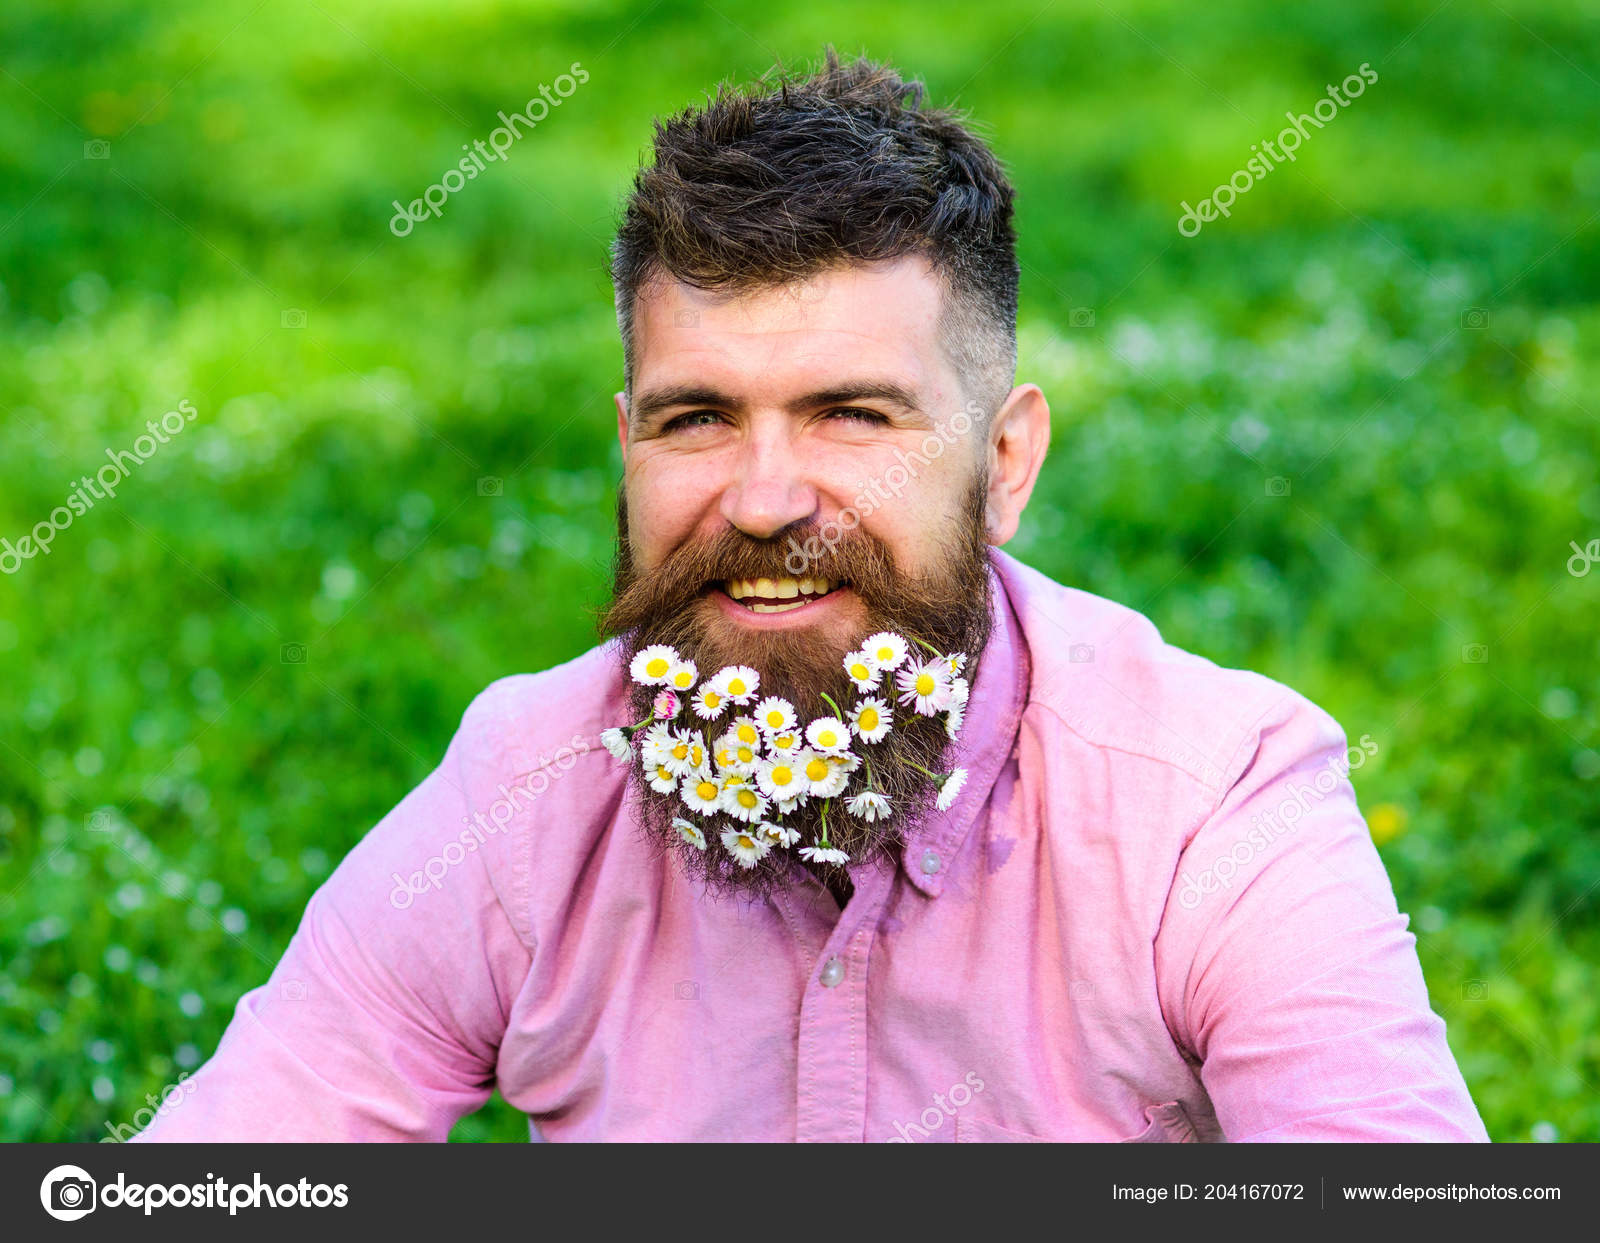 https://st4.depositphotos.com/2760050/20416/i/1600/depositphotos_204167072-stock-photo-man-with-beard-on-happy.jpg